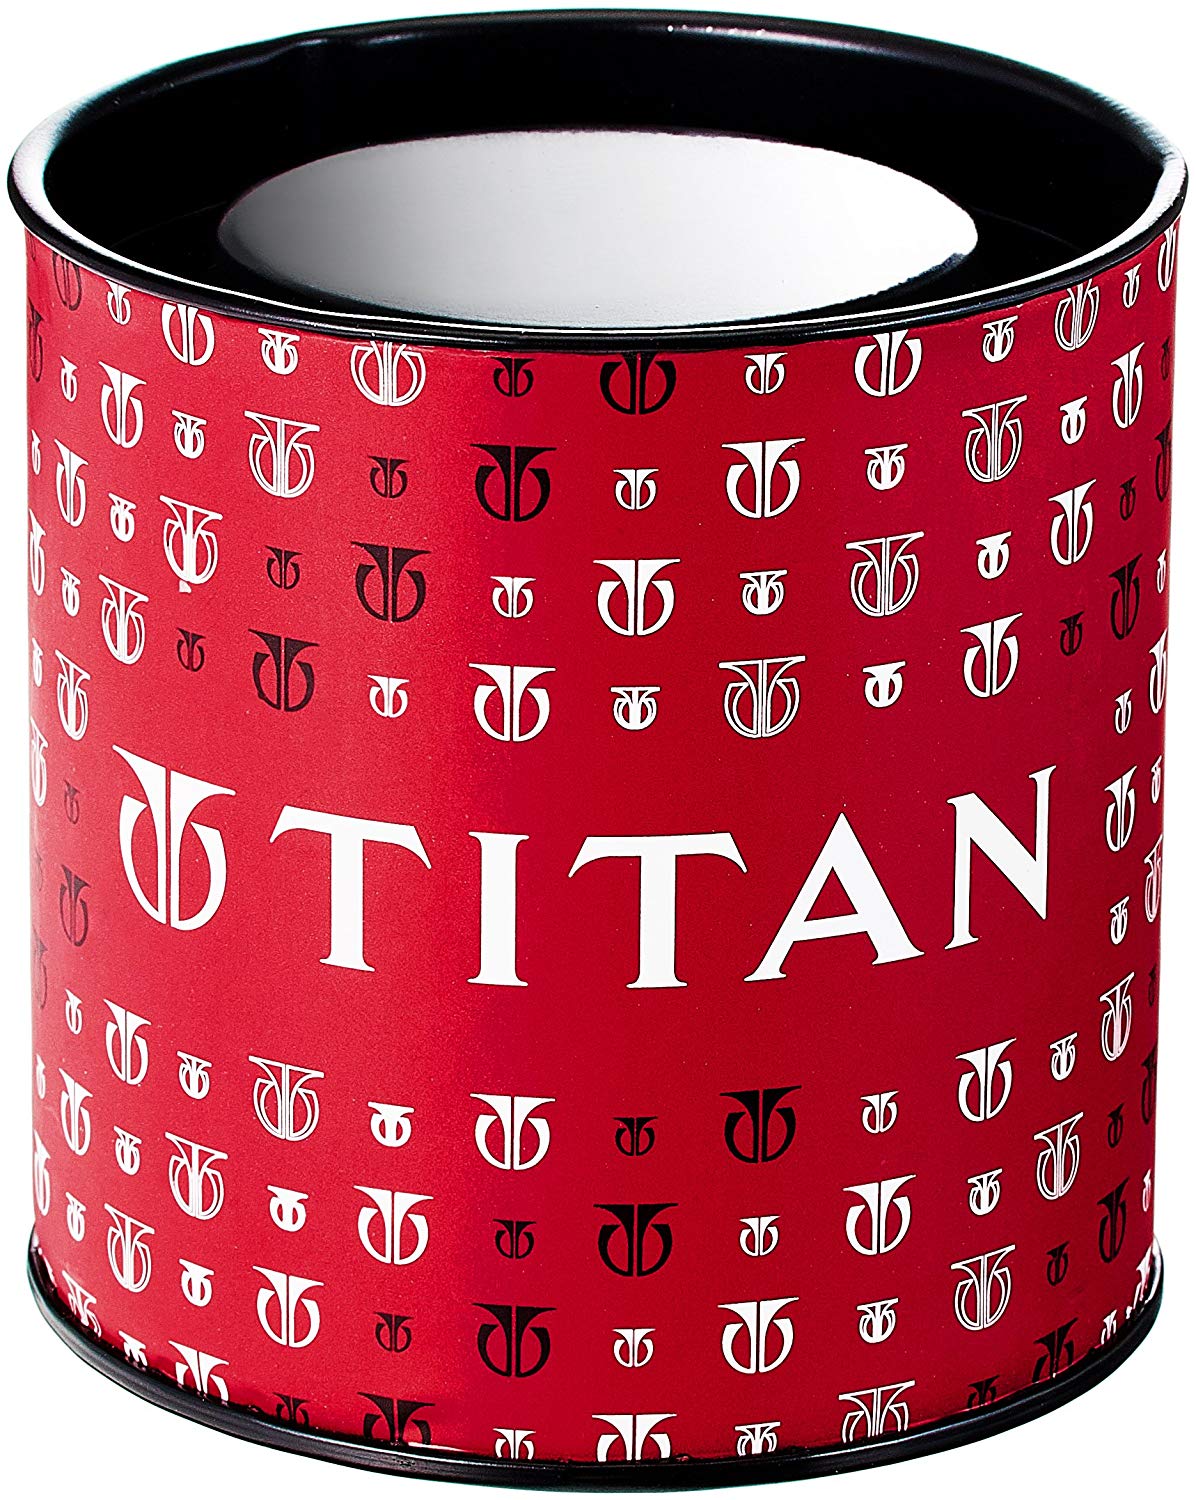 Titan Octane Analog Silver Dial Men's Watch -NK1650BM03